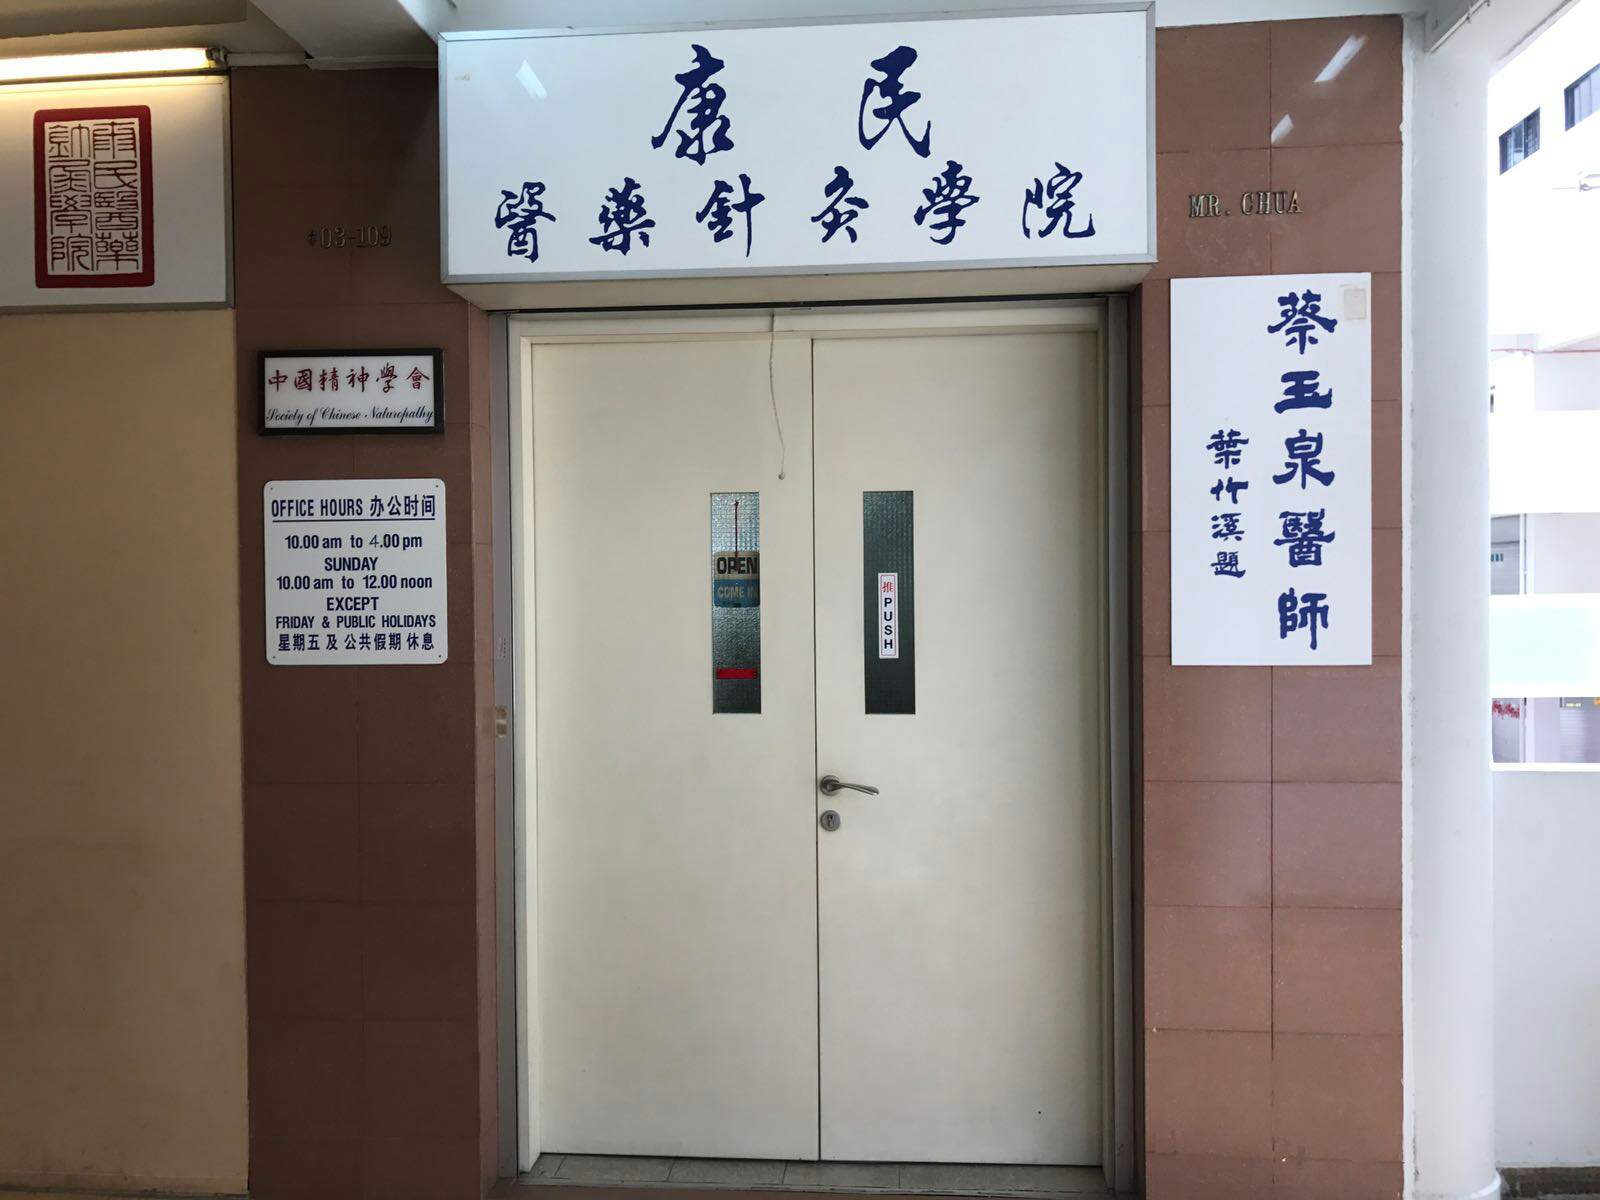 Kang ming family clinic